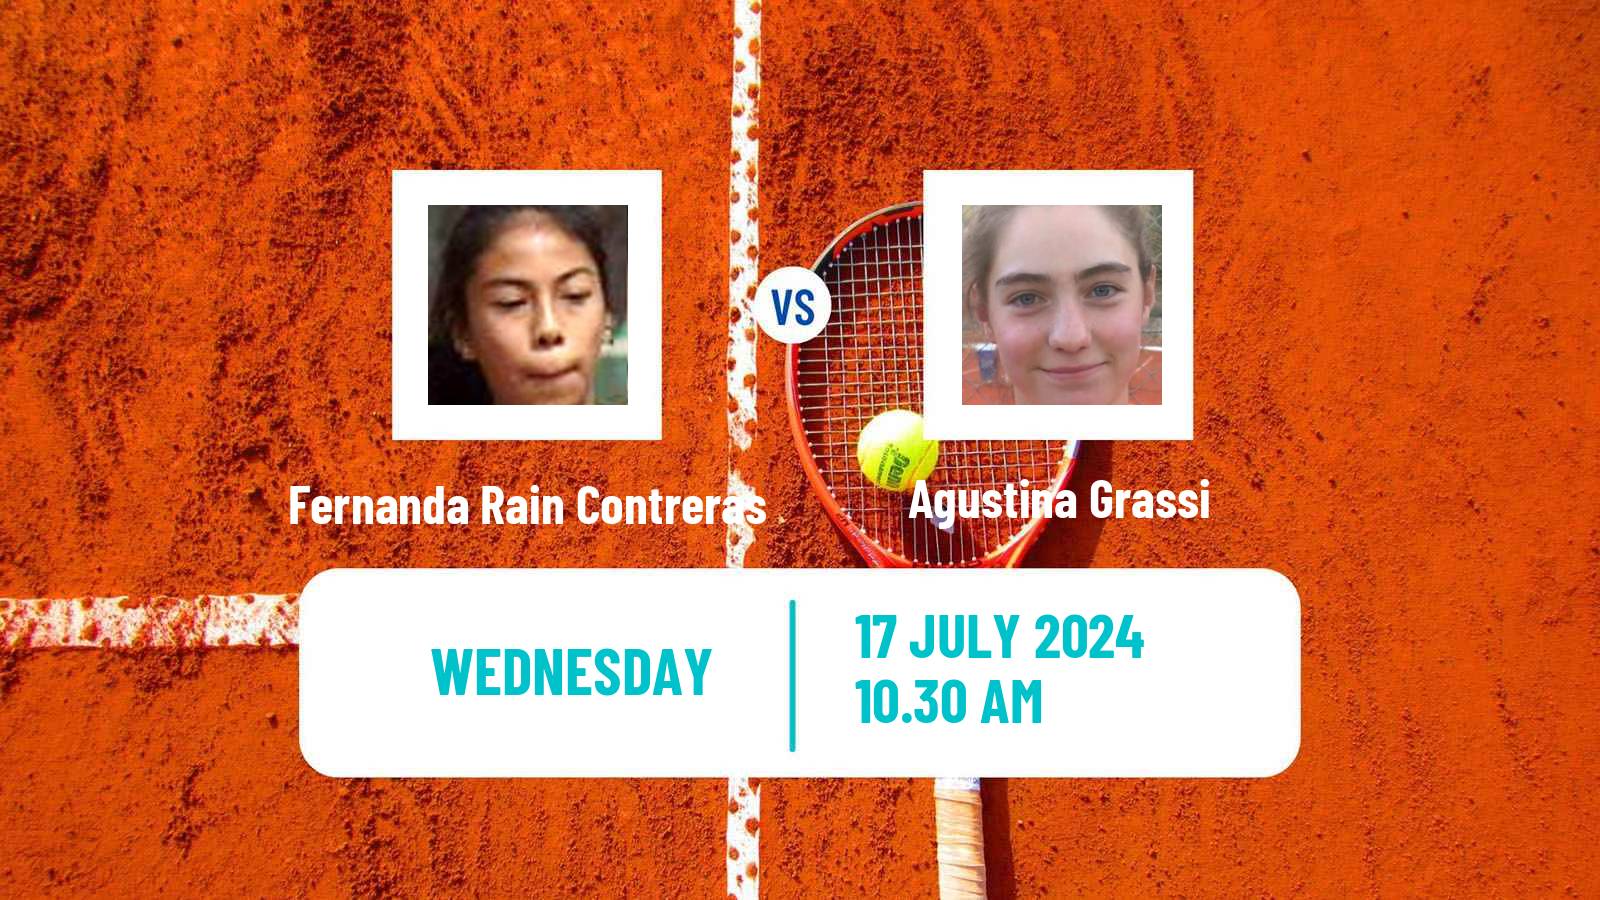 Tennis ITF W15 Lujan 2 Women Fernanda Rain Contreras - Agustina Grassi